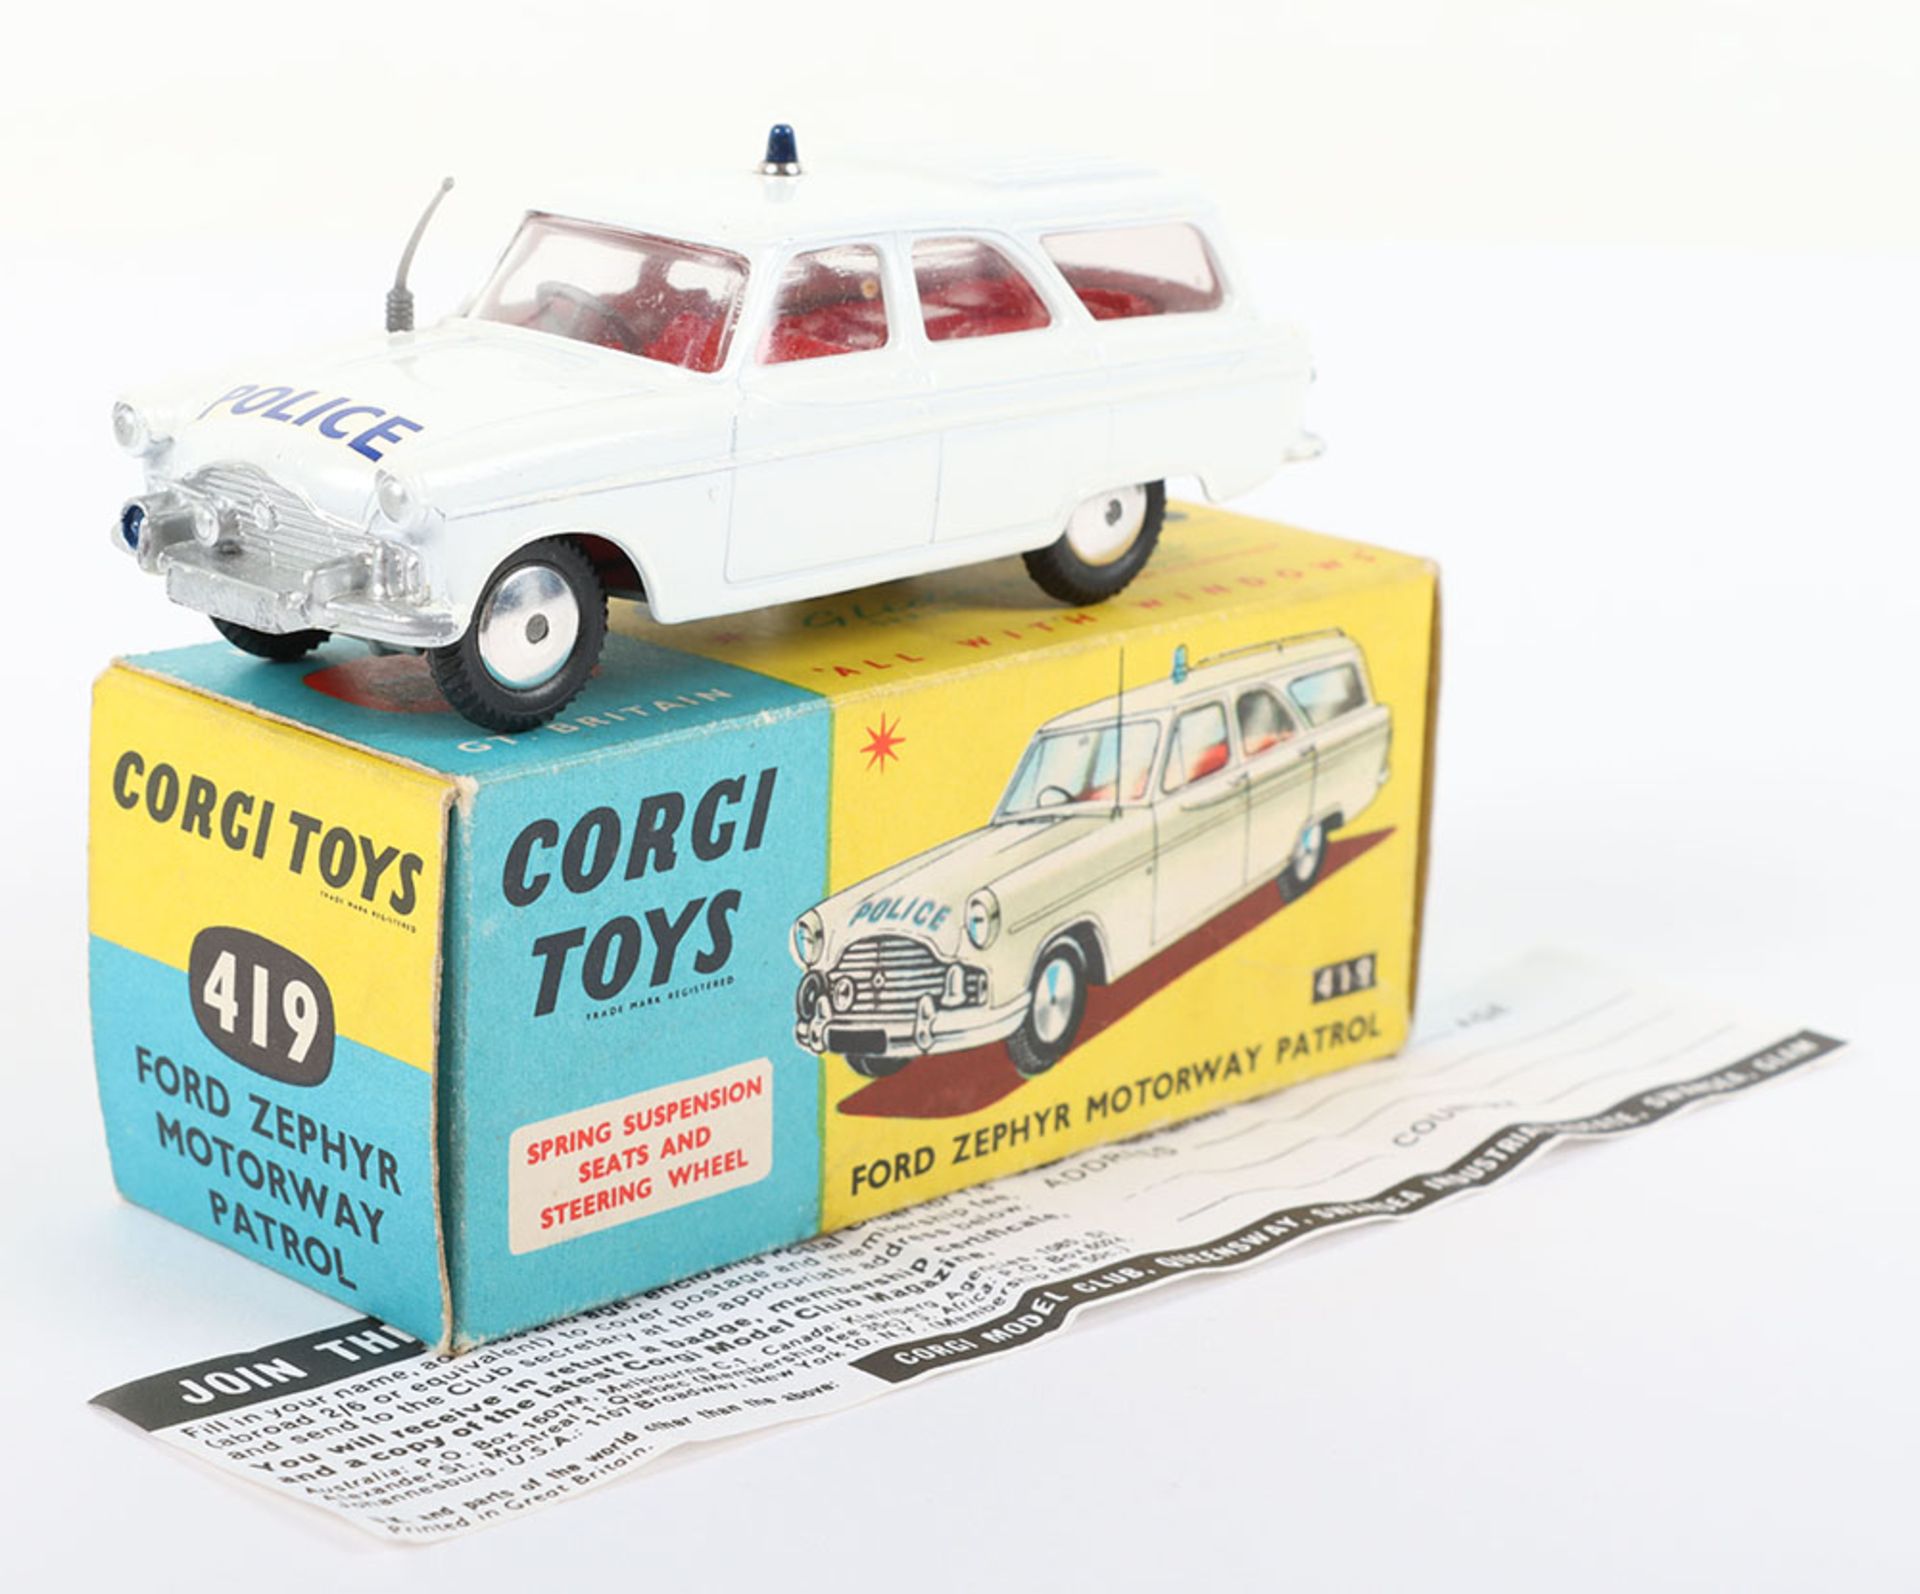 Corgi Toys 419 Ford Zephyr Motorway Patrol - Bild 2 aus 6